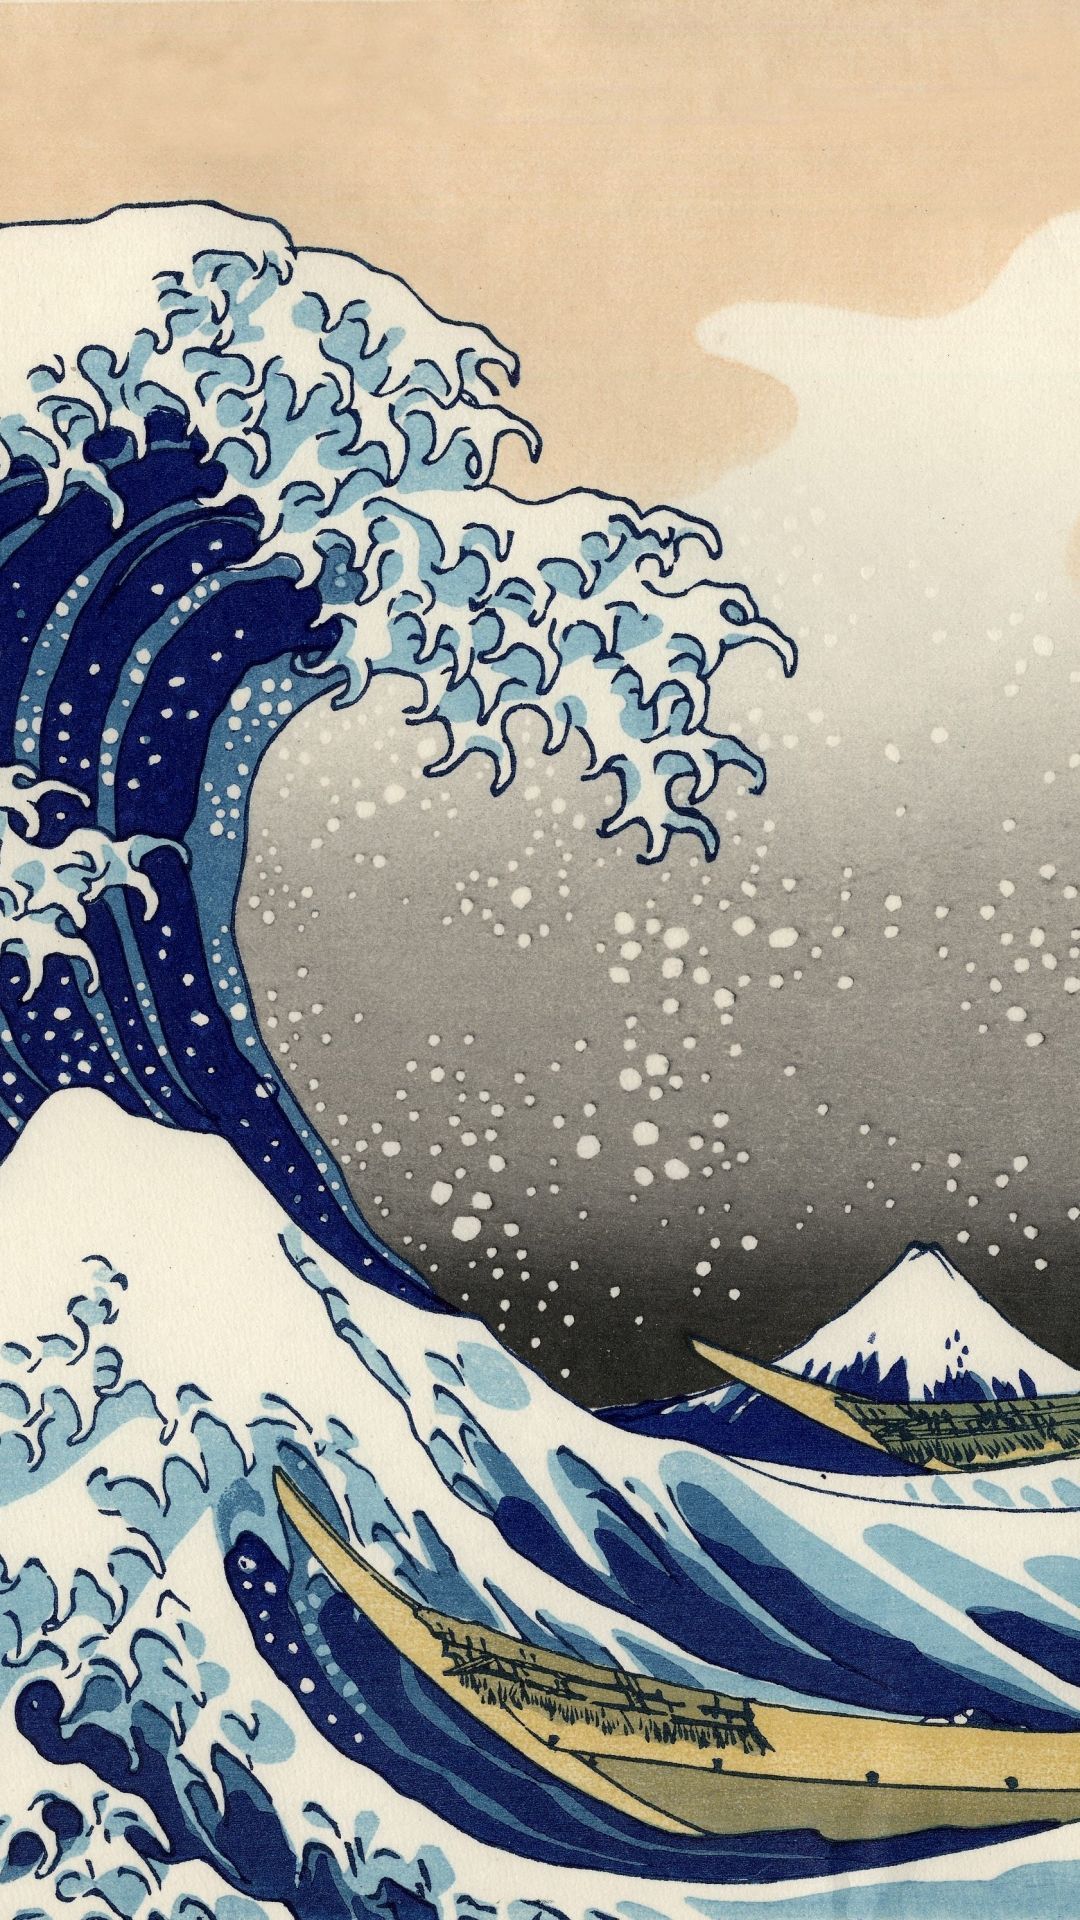 Artistic The Great Wave Off Kanagawa. Art Wallpaper, Japanese Art, Waves Wallpaper